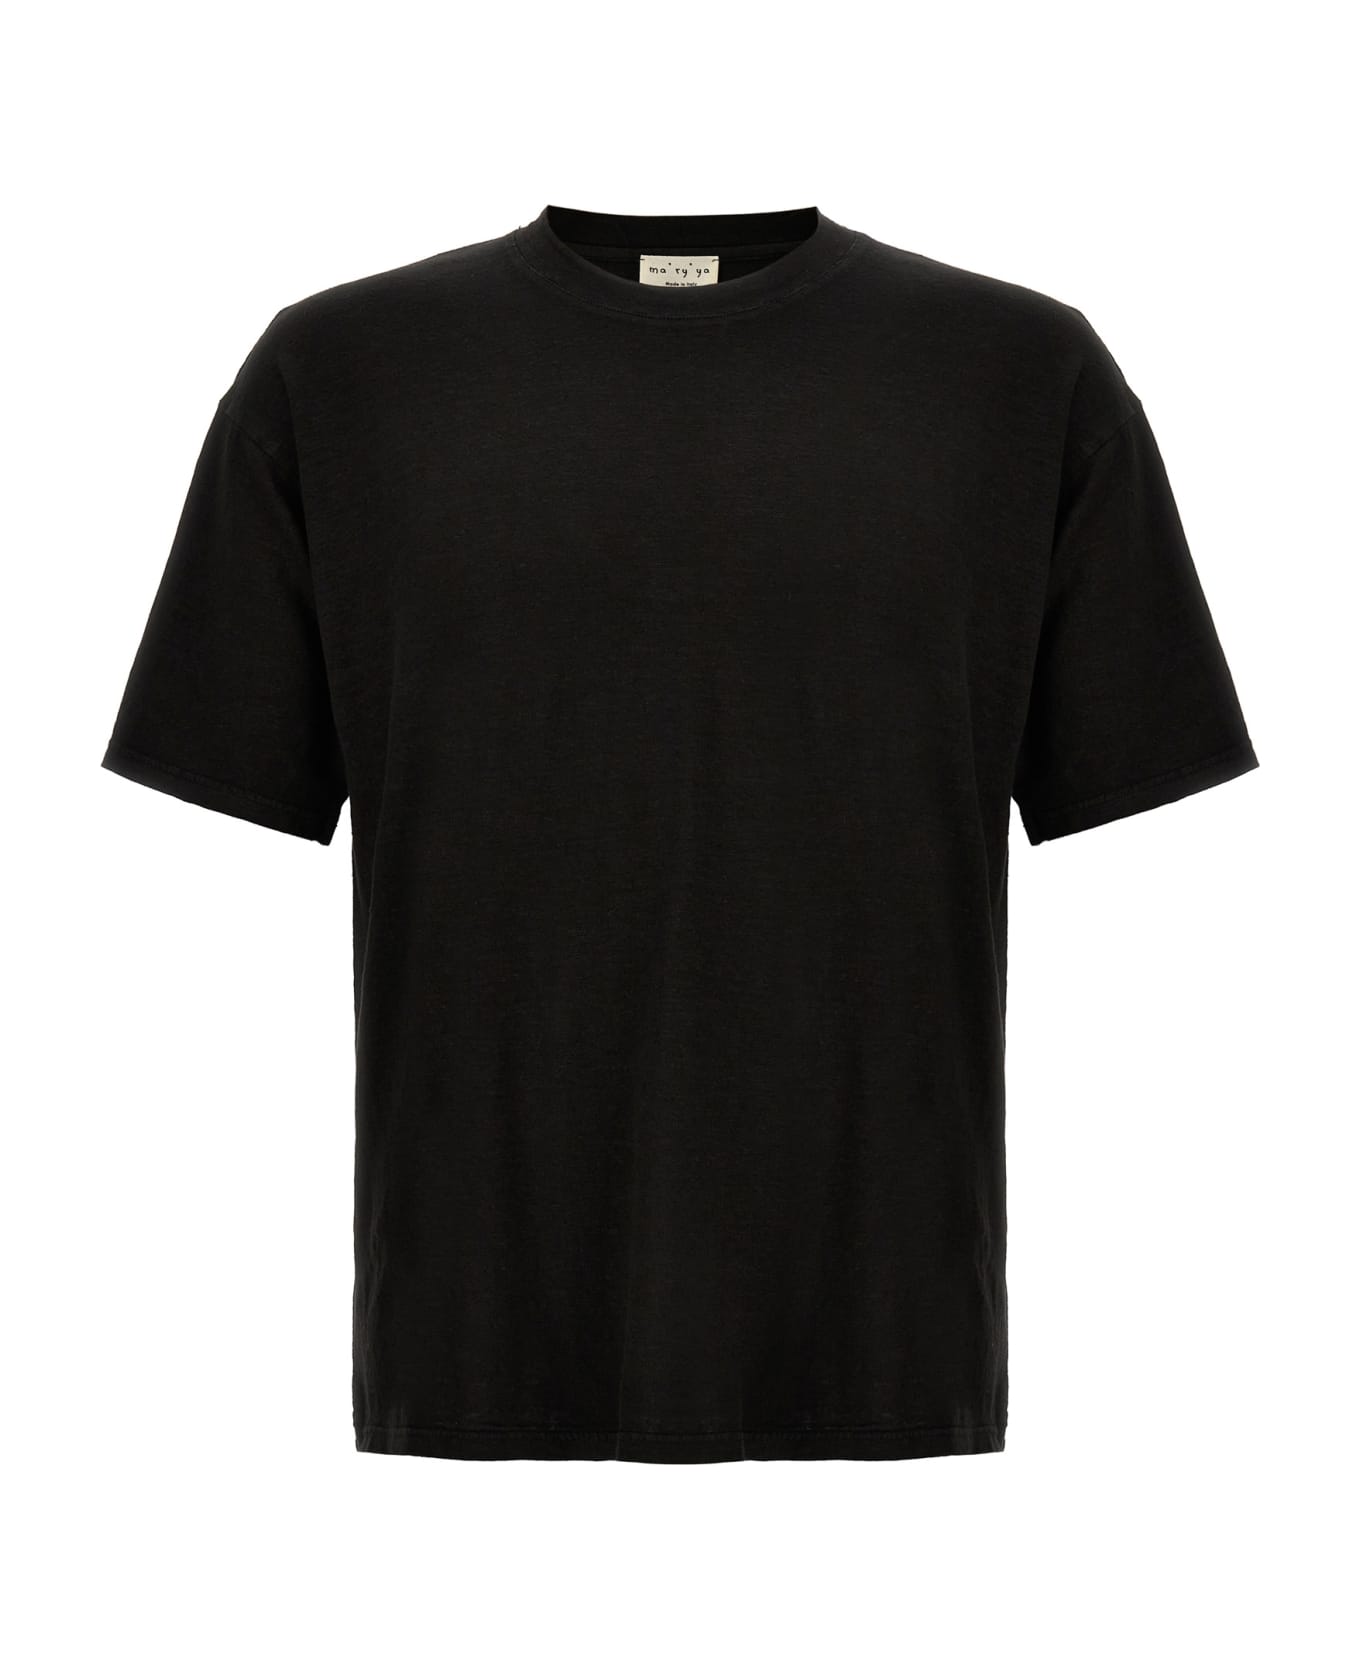 Ma'ry'ya Linen T-shirt - Black  